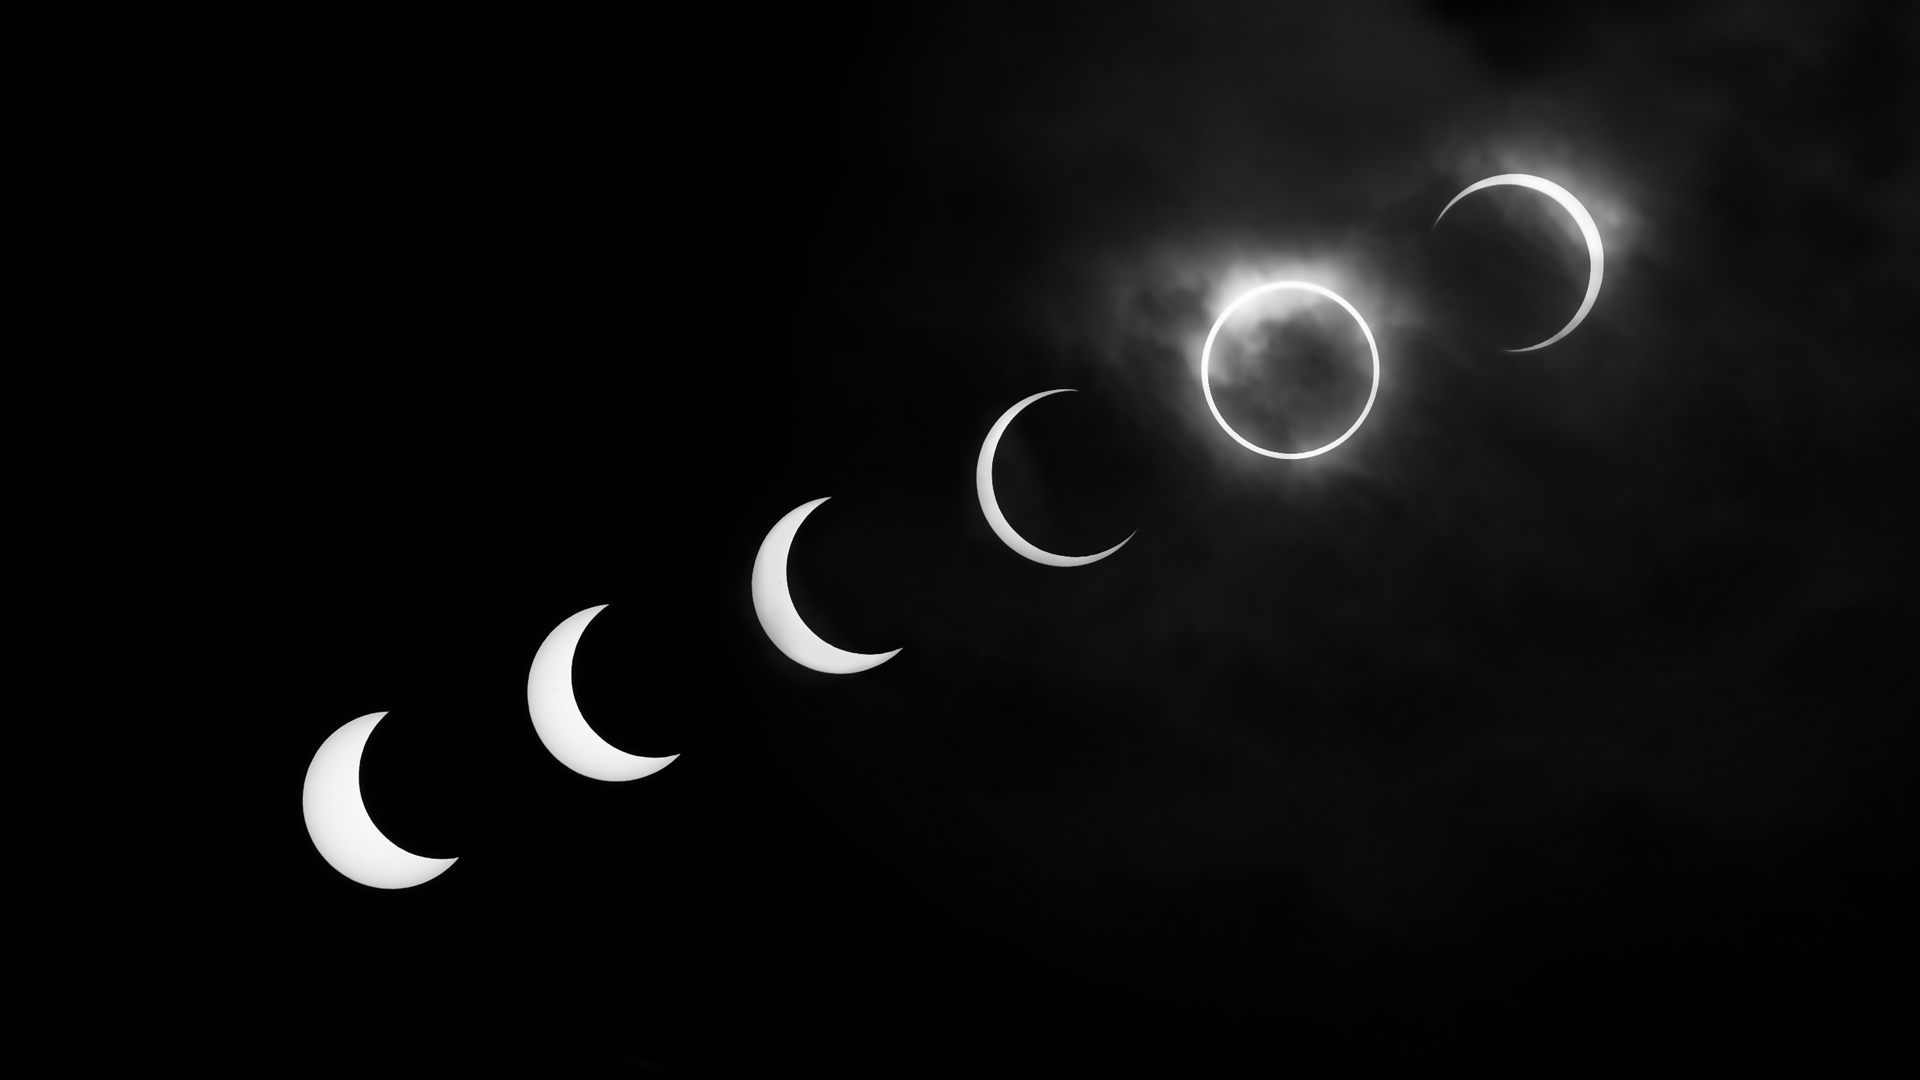 Solar eclipse black and white desktop wallpaper 1920x1080